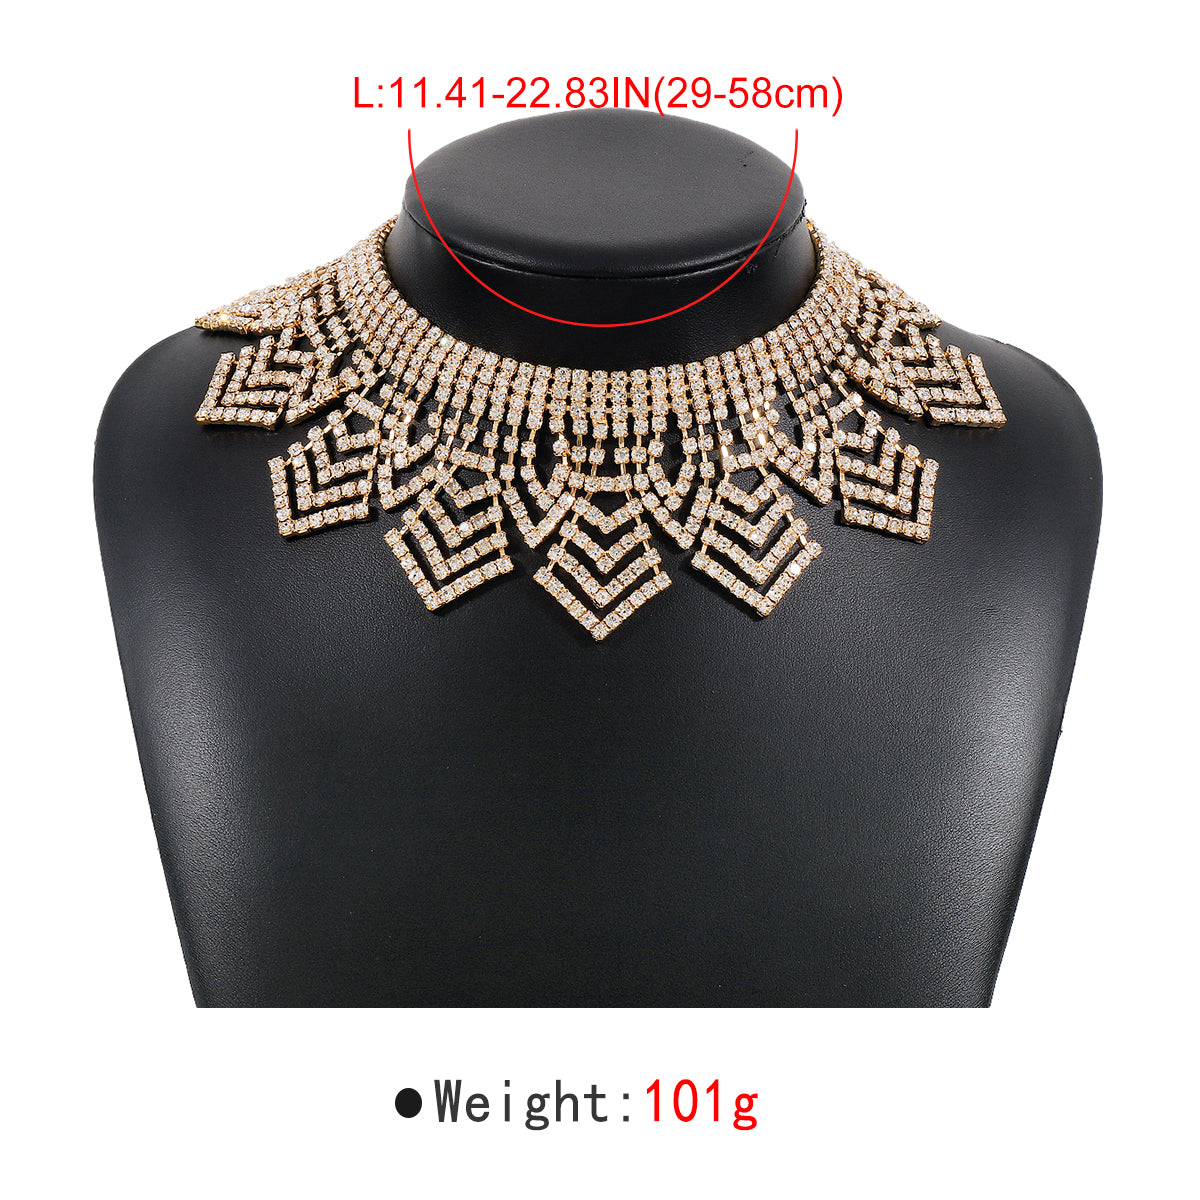 N11240 Shinny Full Crystal Choker Necklaces